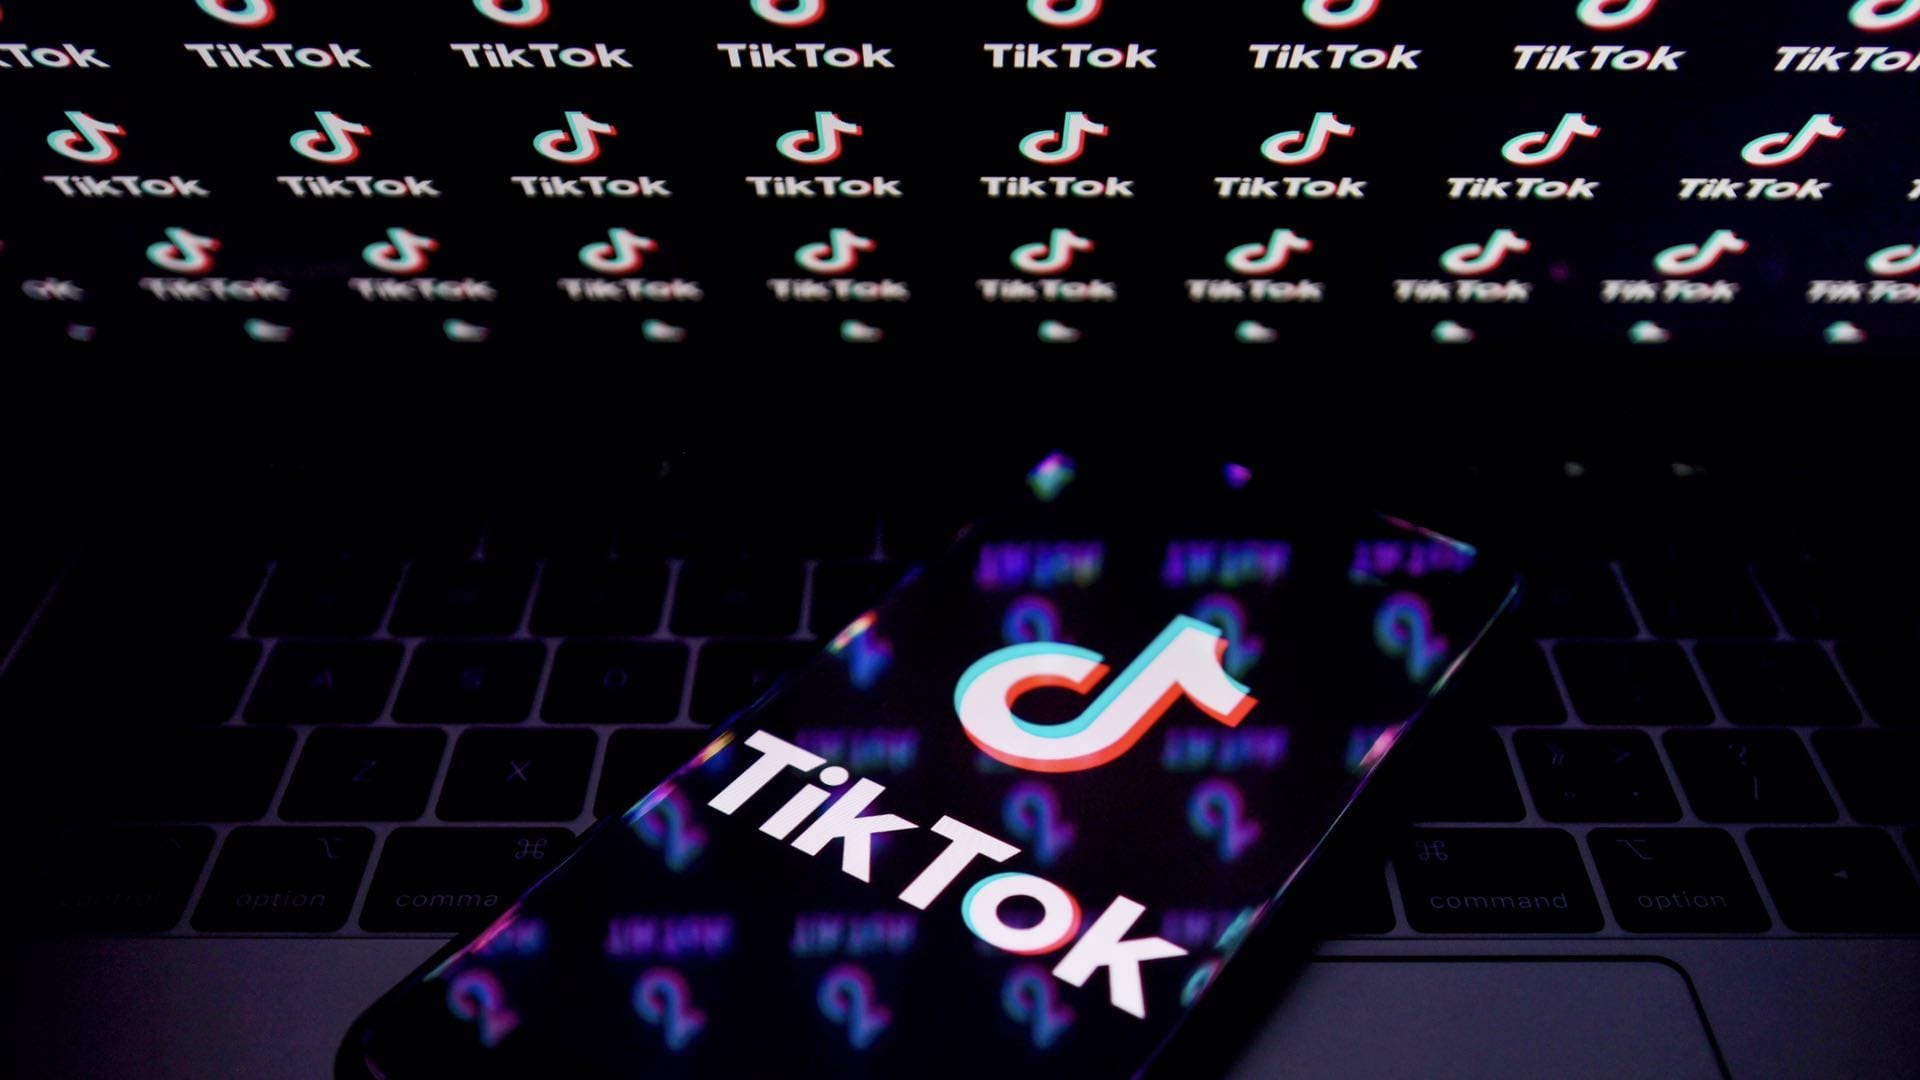 TikTok Catfish Filter